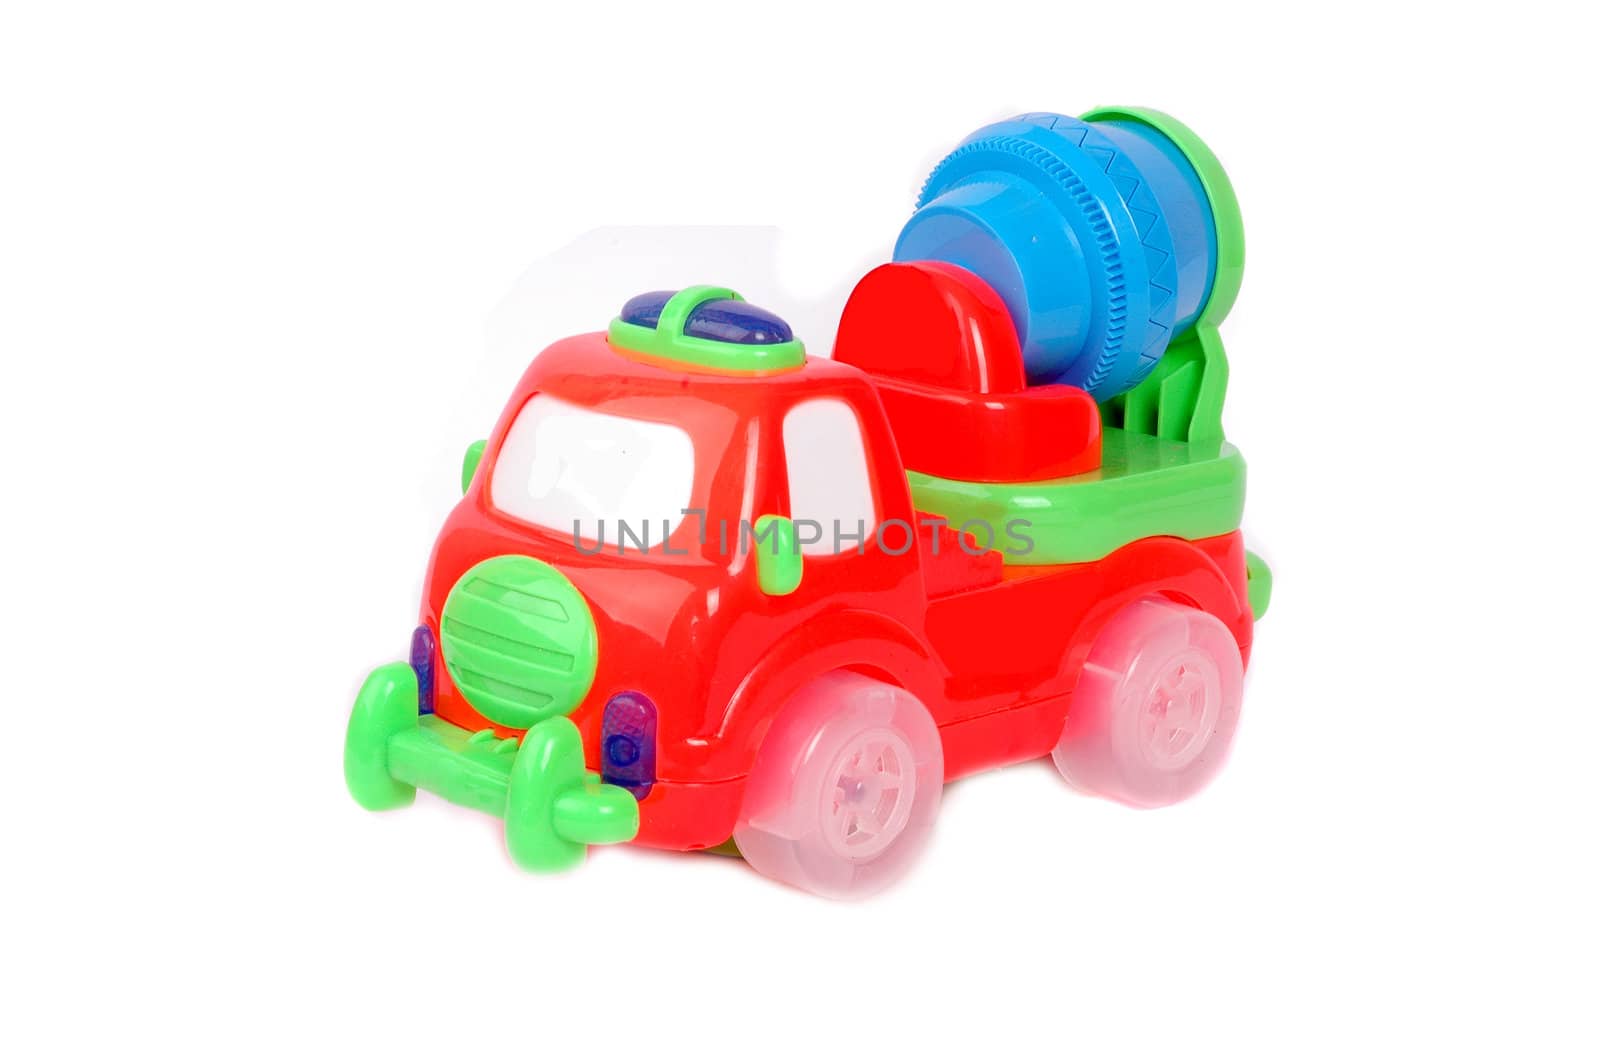 plastic toy car by antonihalim